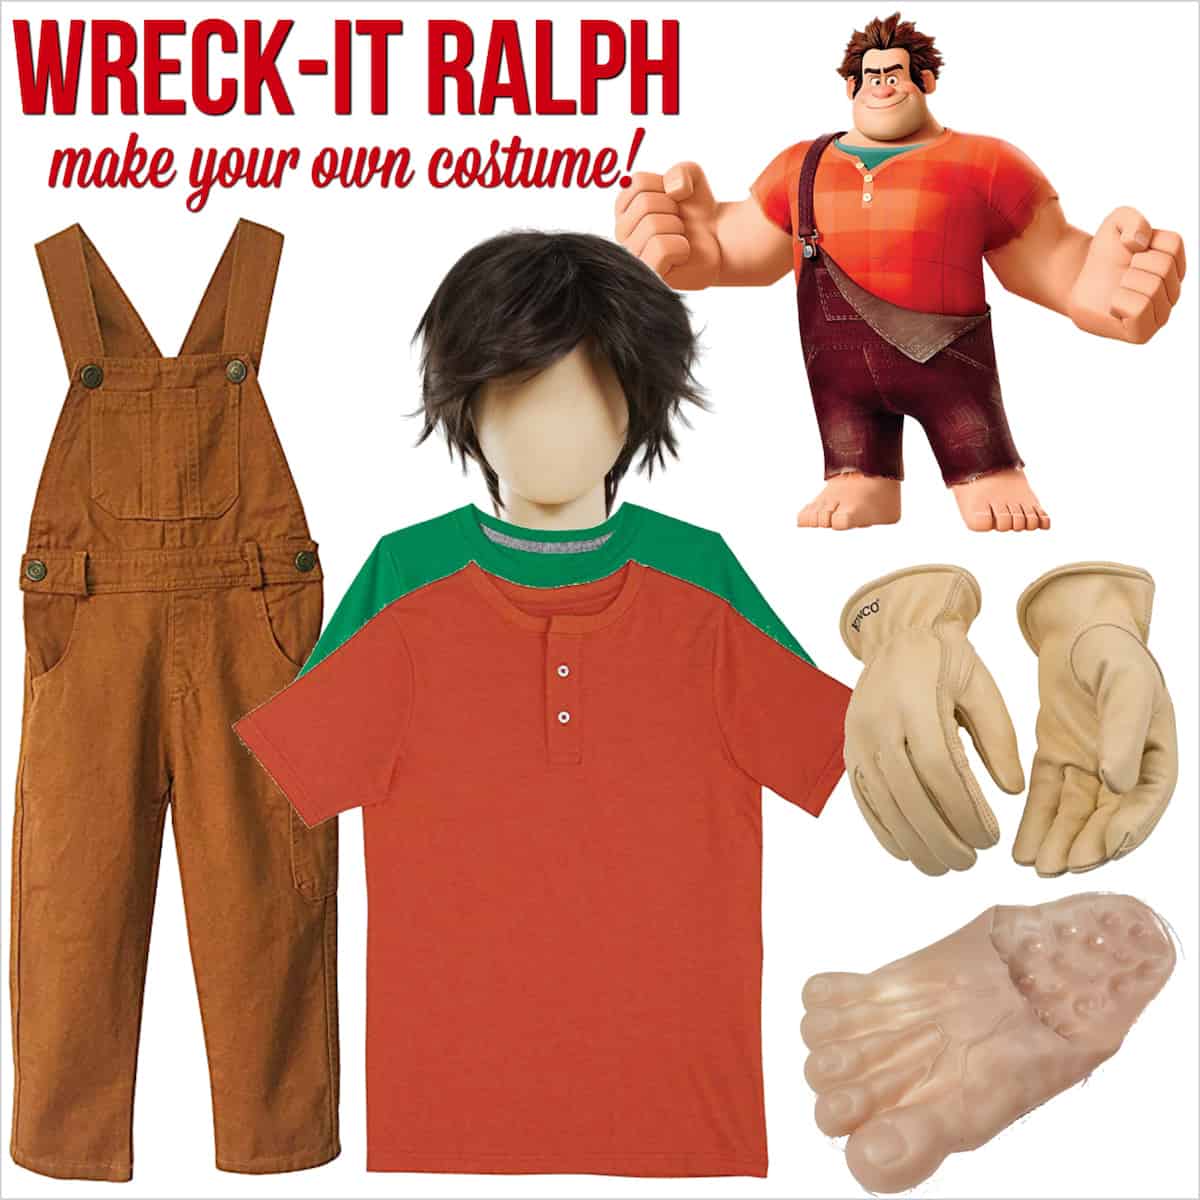 DIY Wreck-it Ralph Costume